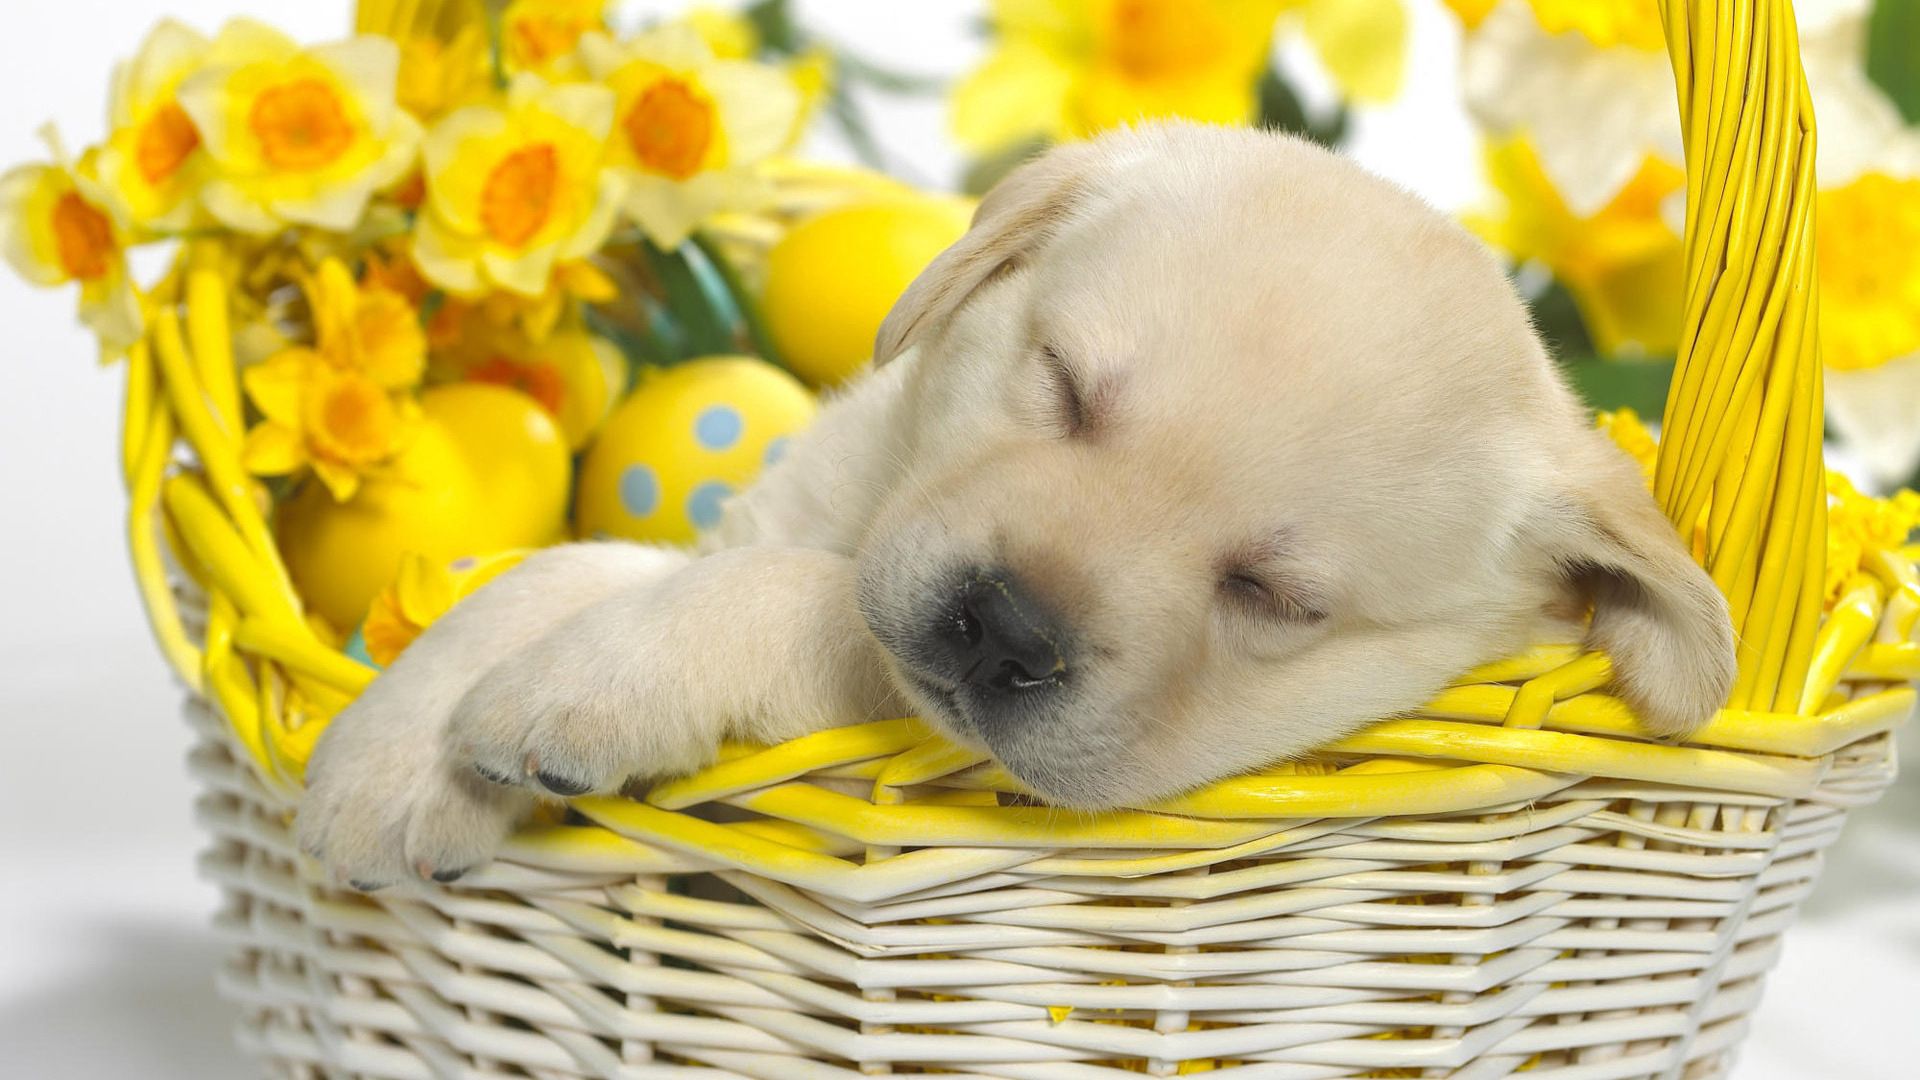 HD wallpaper labrador, animals, flowers, eggs, easter, puppy, sleep, dream, basket